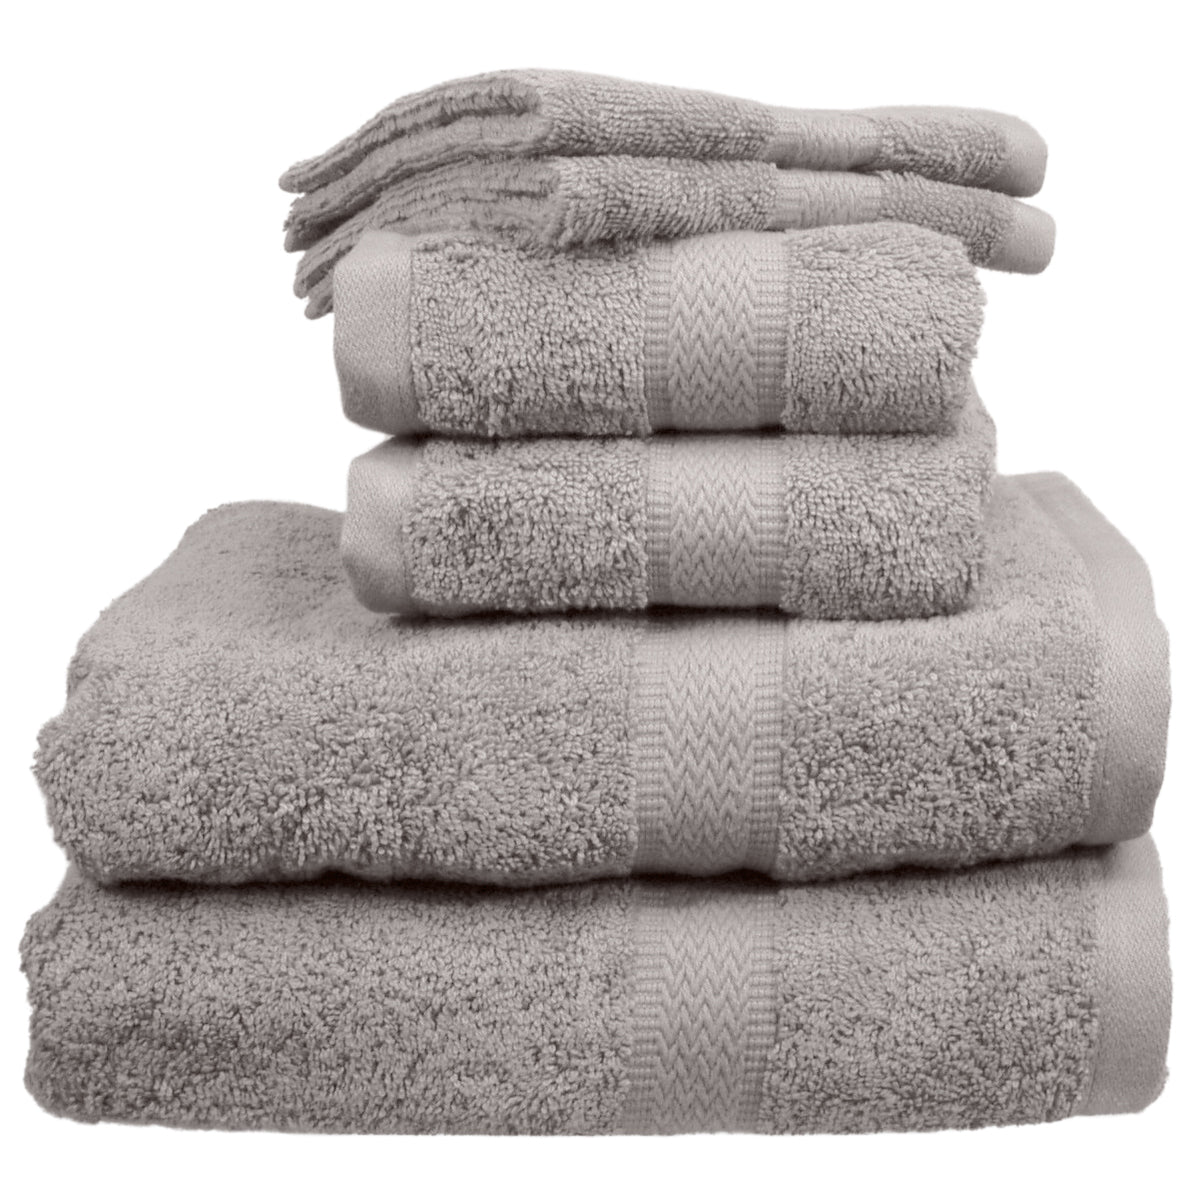 Bath towels, wash cloths, hand towel